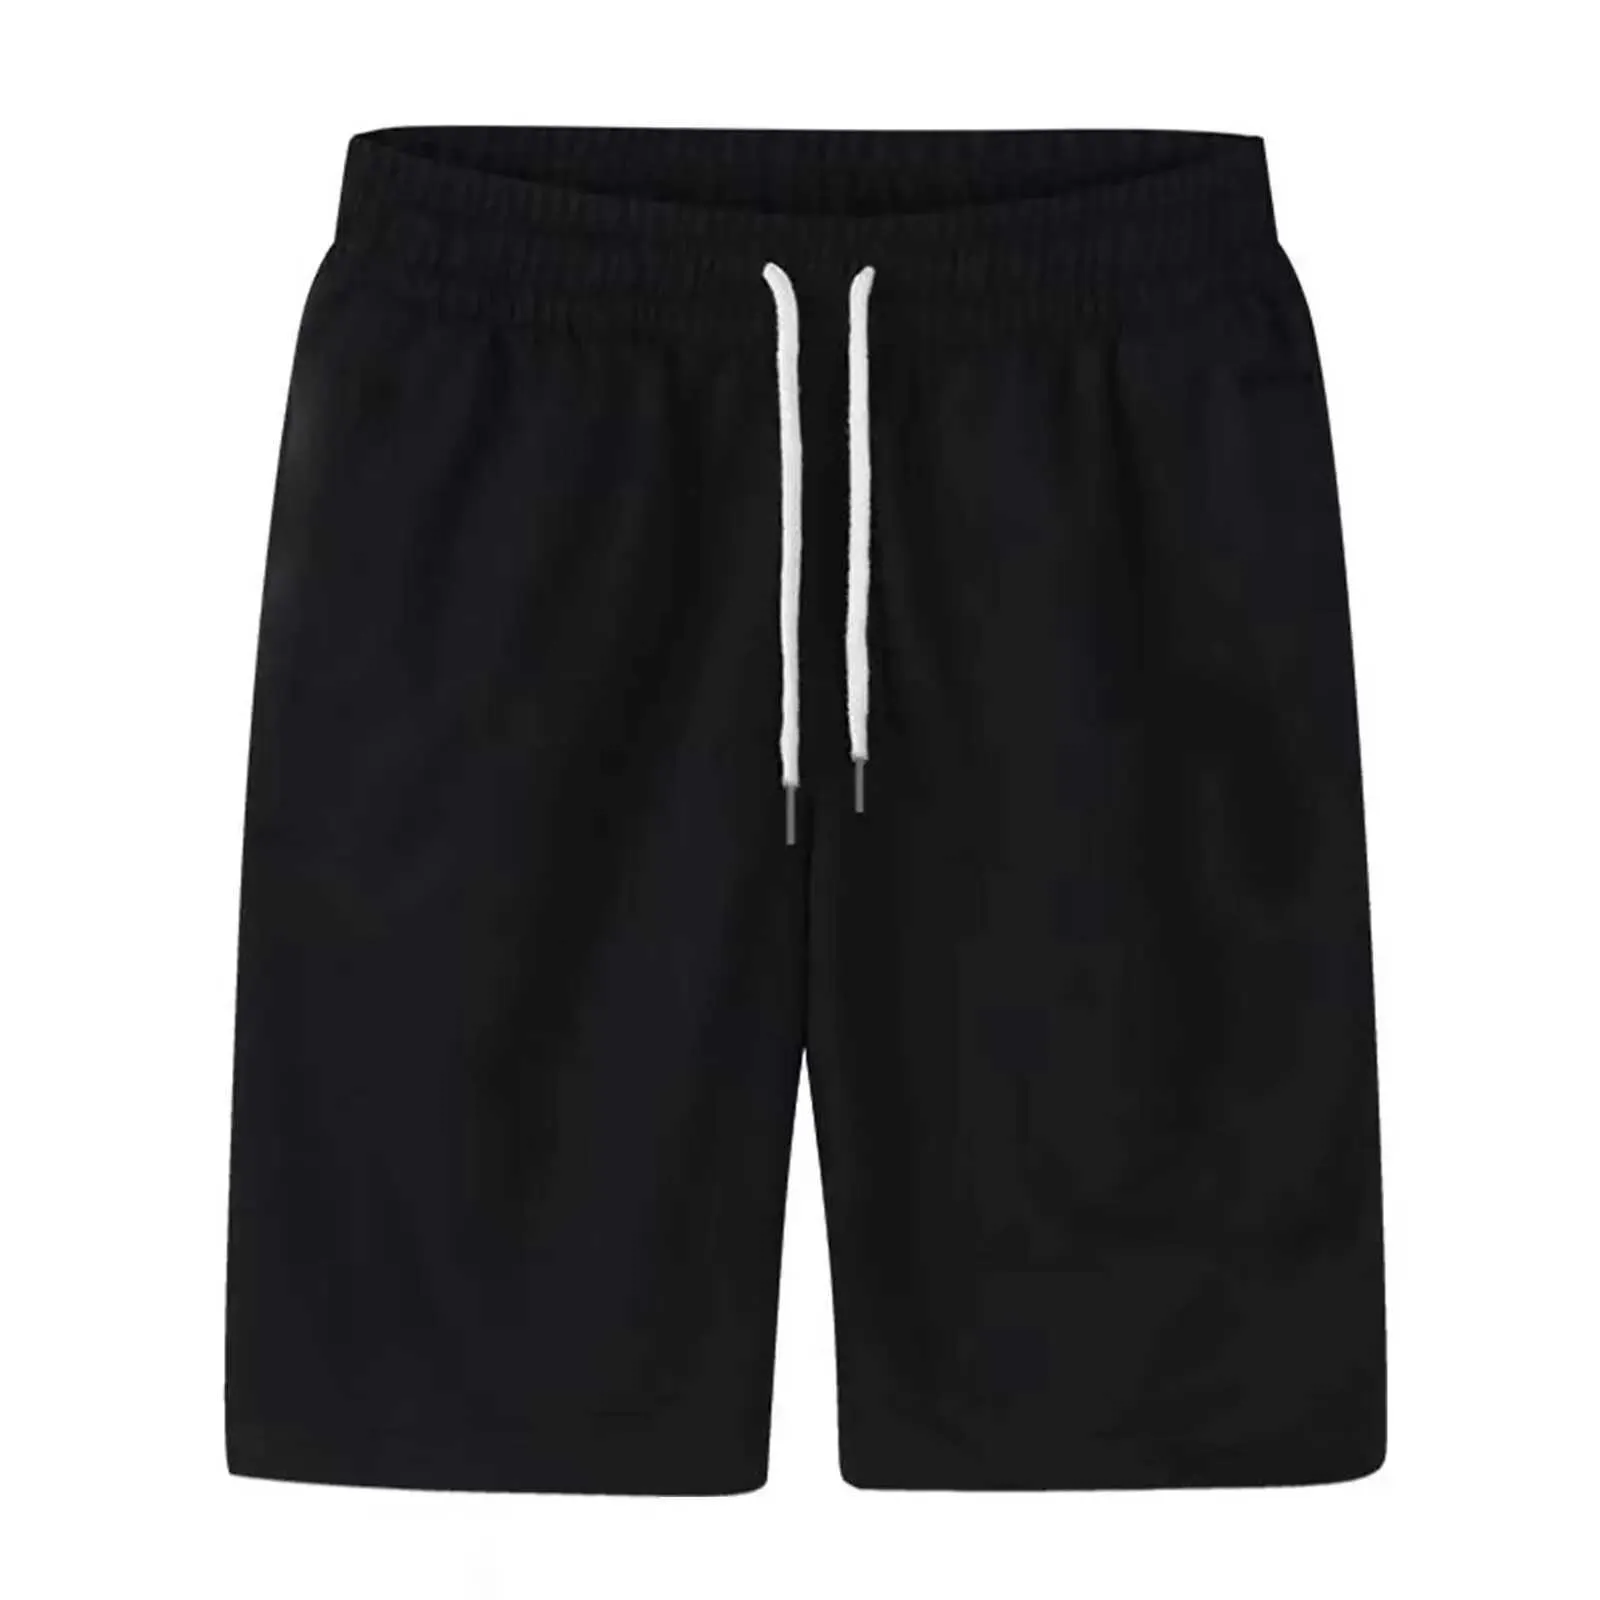 Sports Men's Shorts Mens Pocket Solid Trawstring Board Trunk Beach Pantals Shorts Summer Summer pantalon zippé Pocked Papant de survêtement en vrac.240507